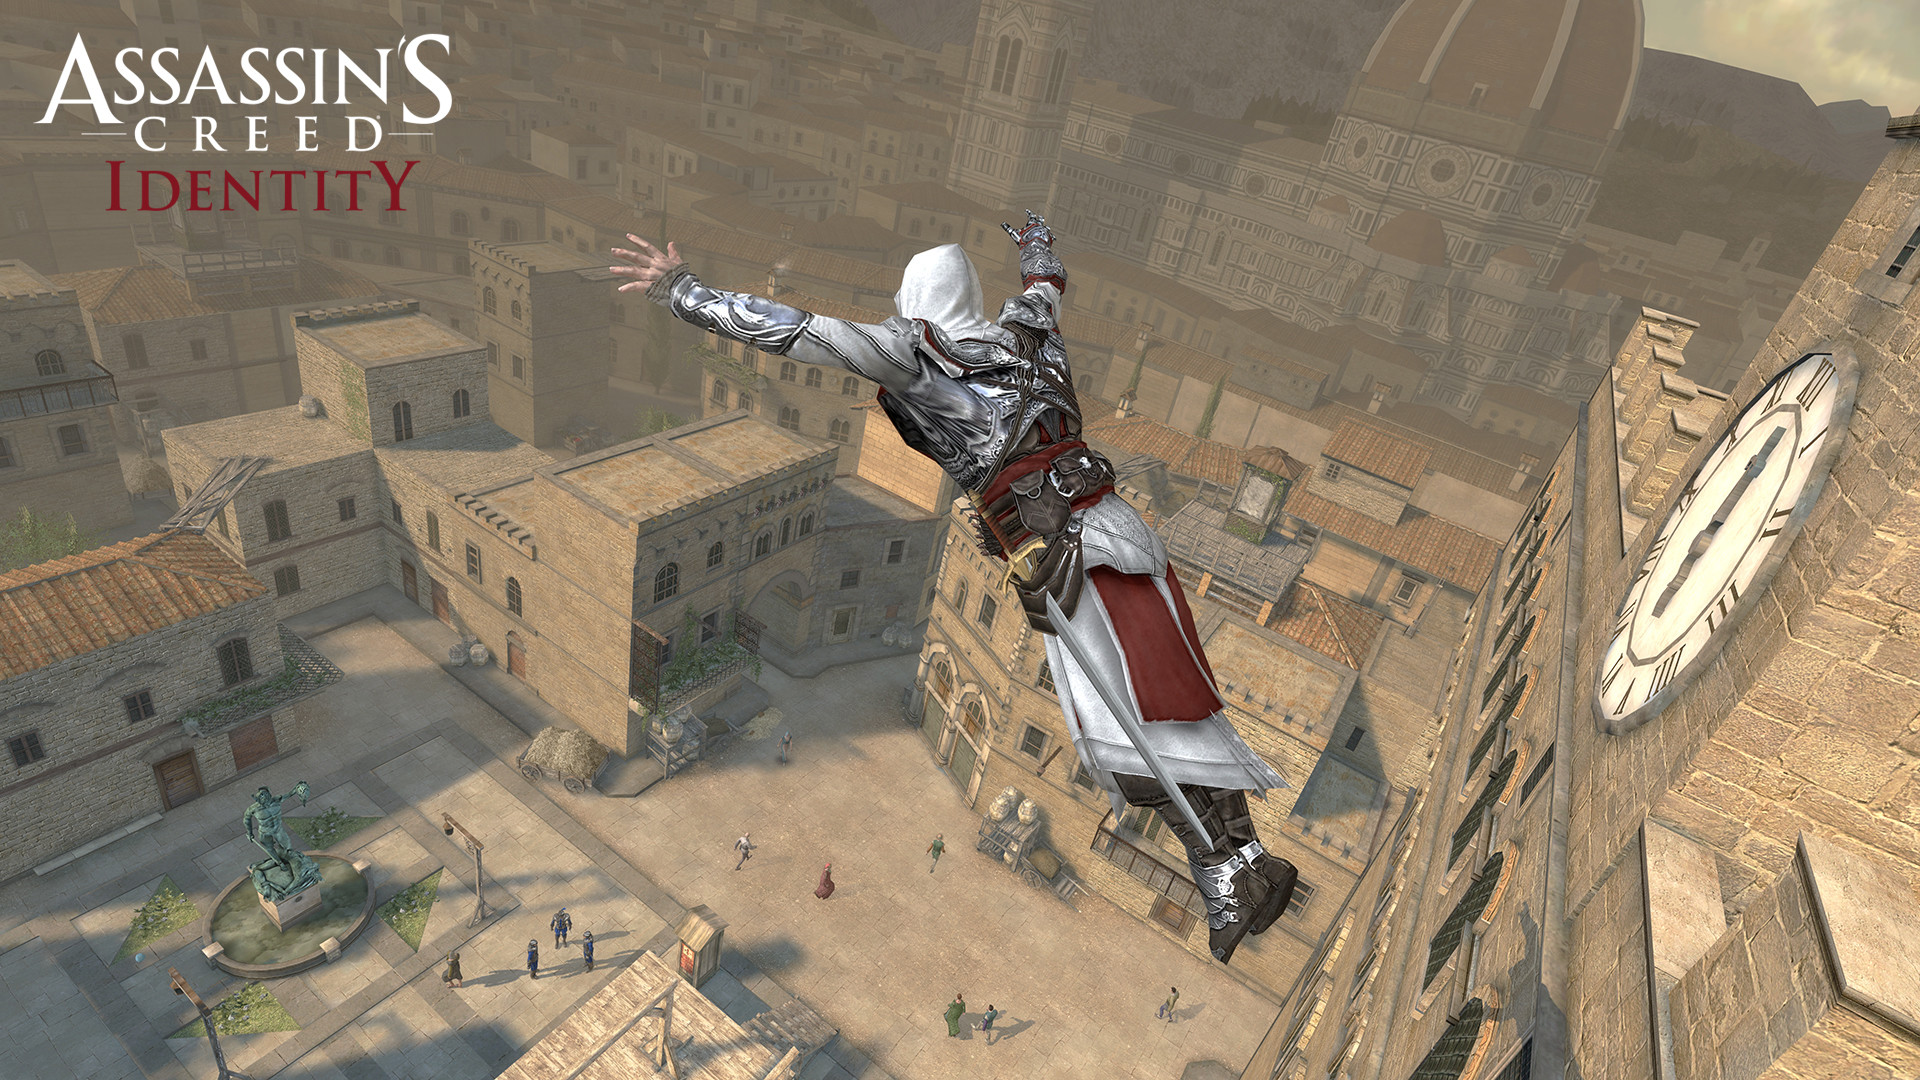 ArtStation - Assassin's Creed Identity: Screenshots, Kristina .net